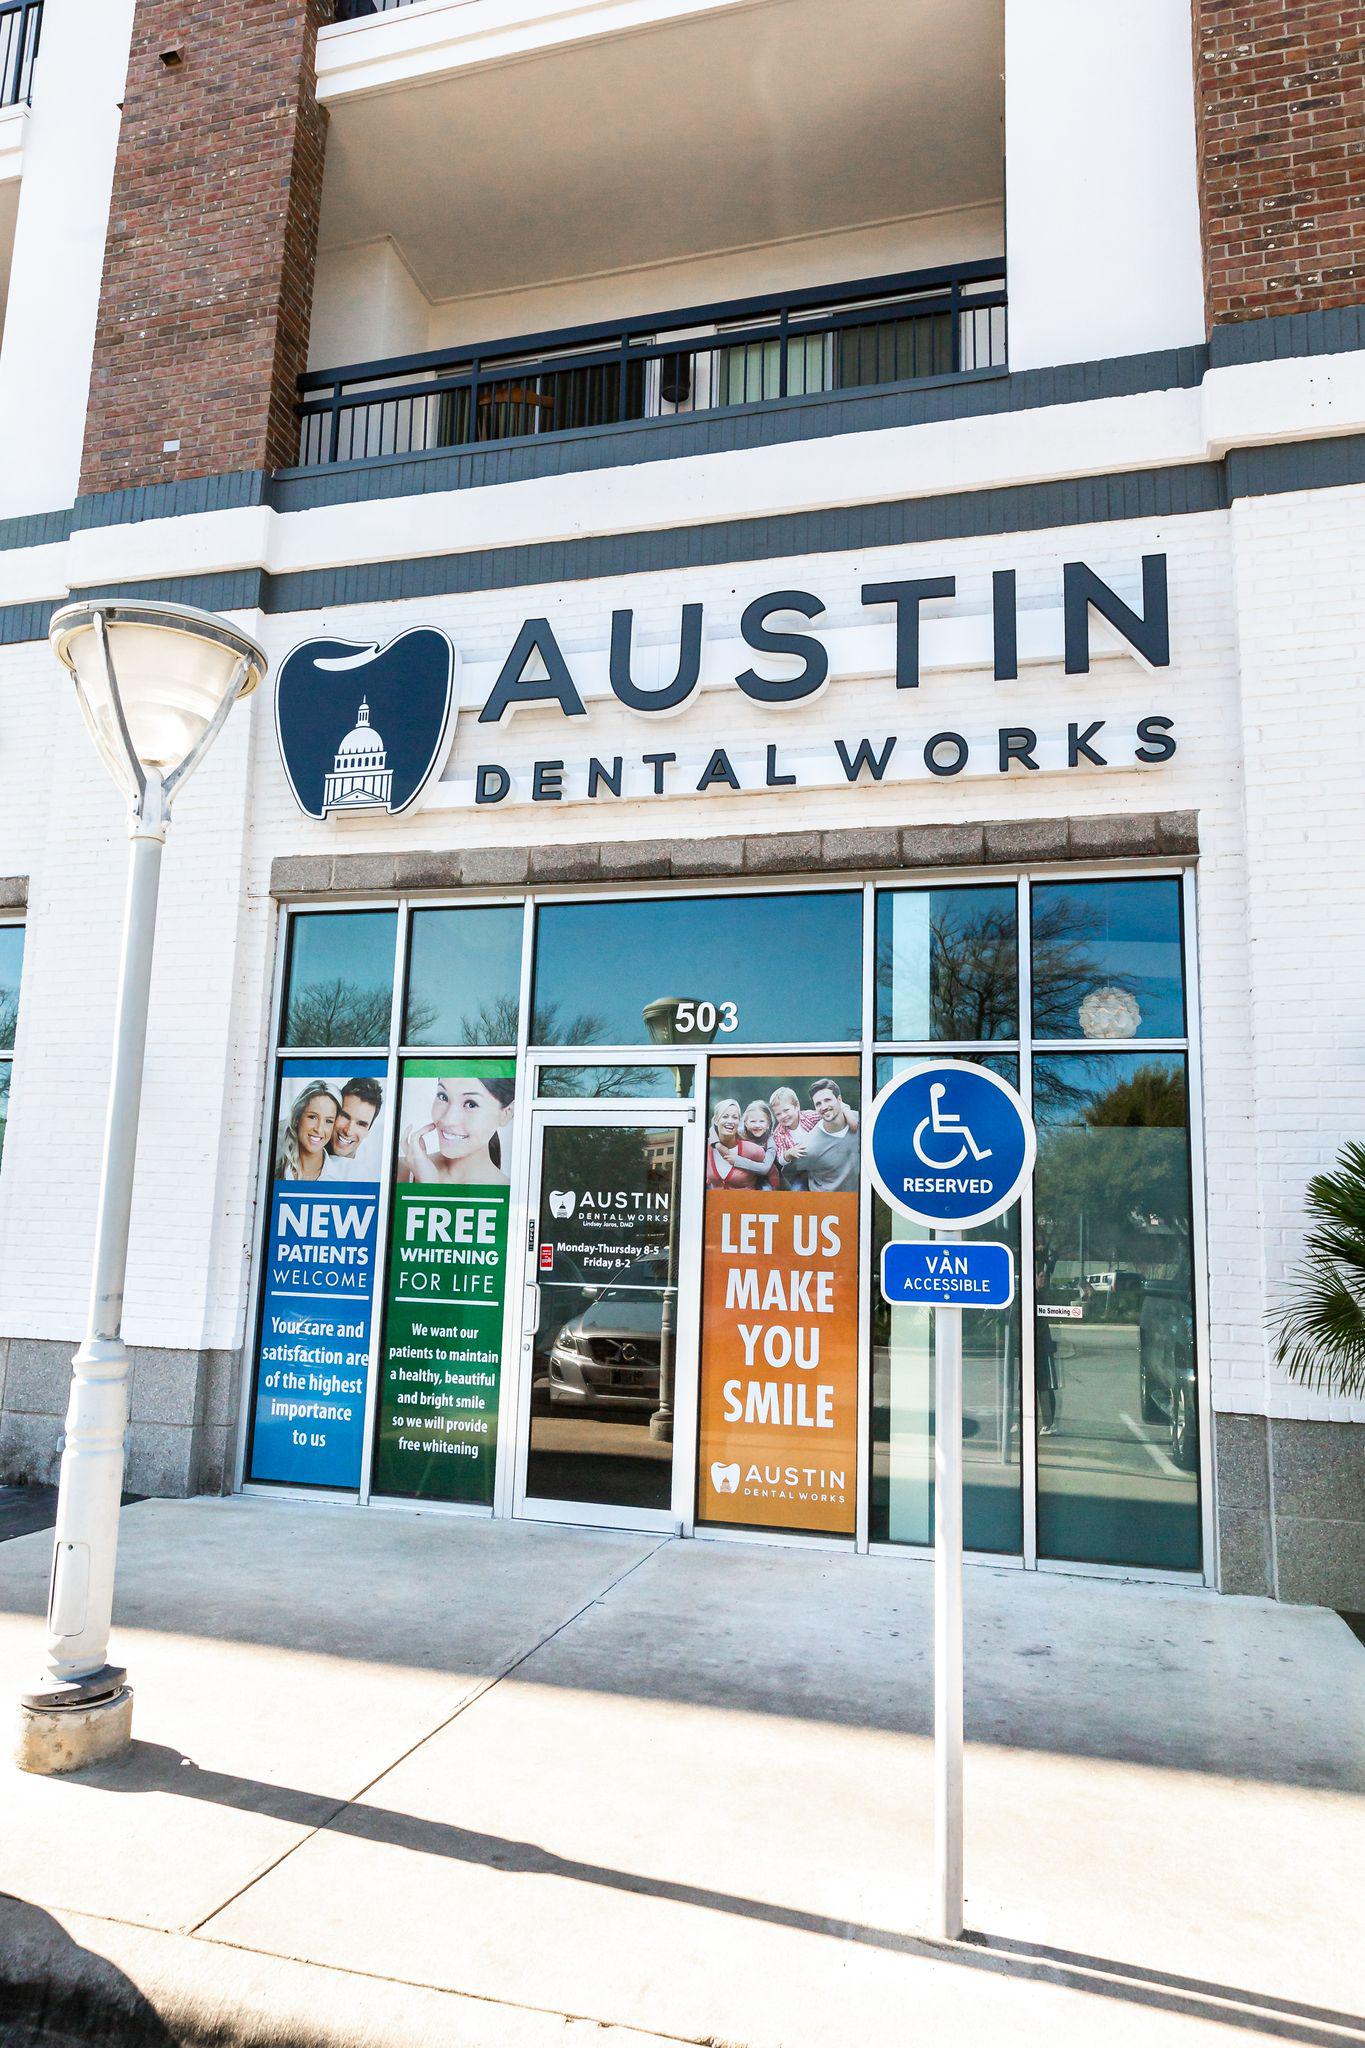 Austin Dental Works
4601 North Lamar Boulevard
Suite 503 Austin, TX 78751
https://www.austindentalworks.com